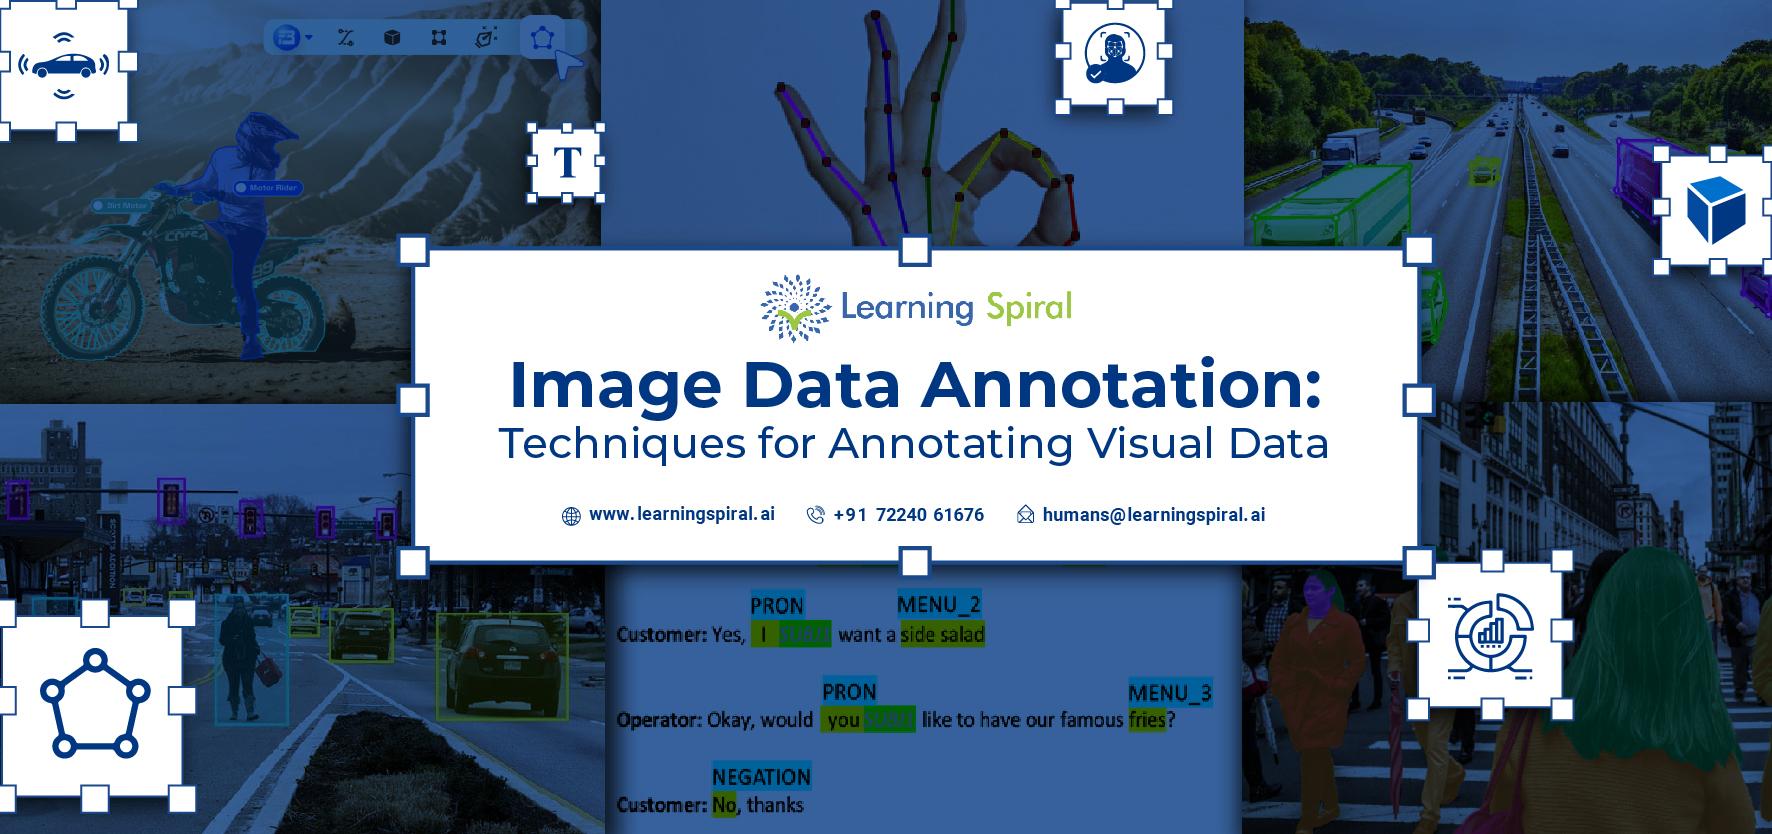 Image_Data_Annotationn